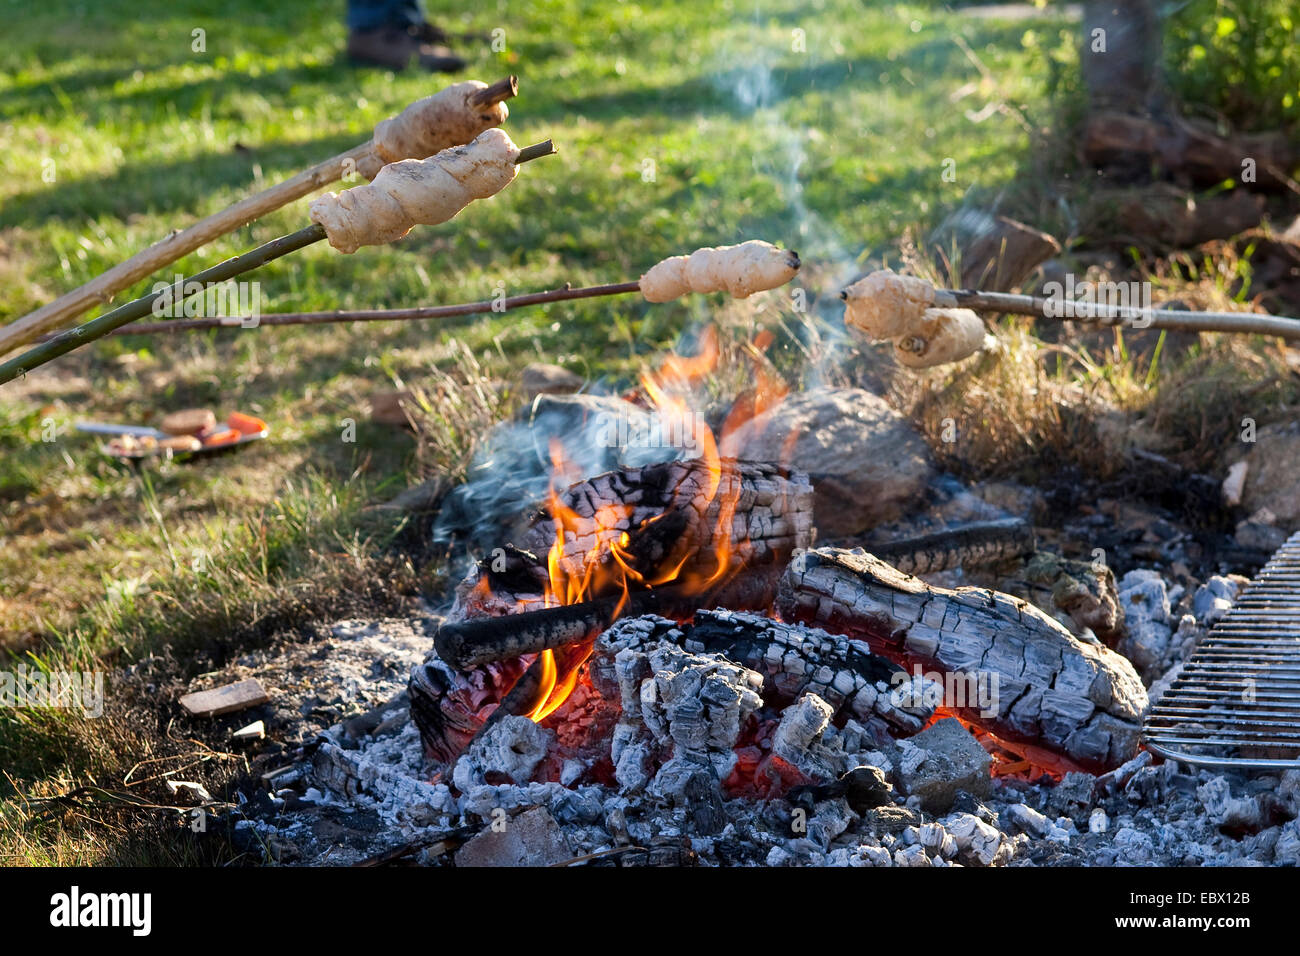 children baking bread over a campfire Stock Photo - Alamy